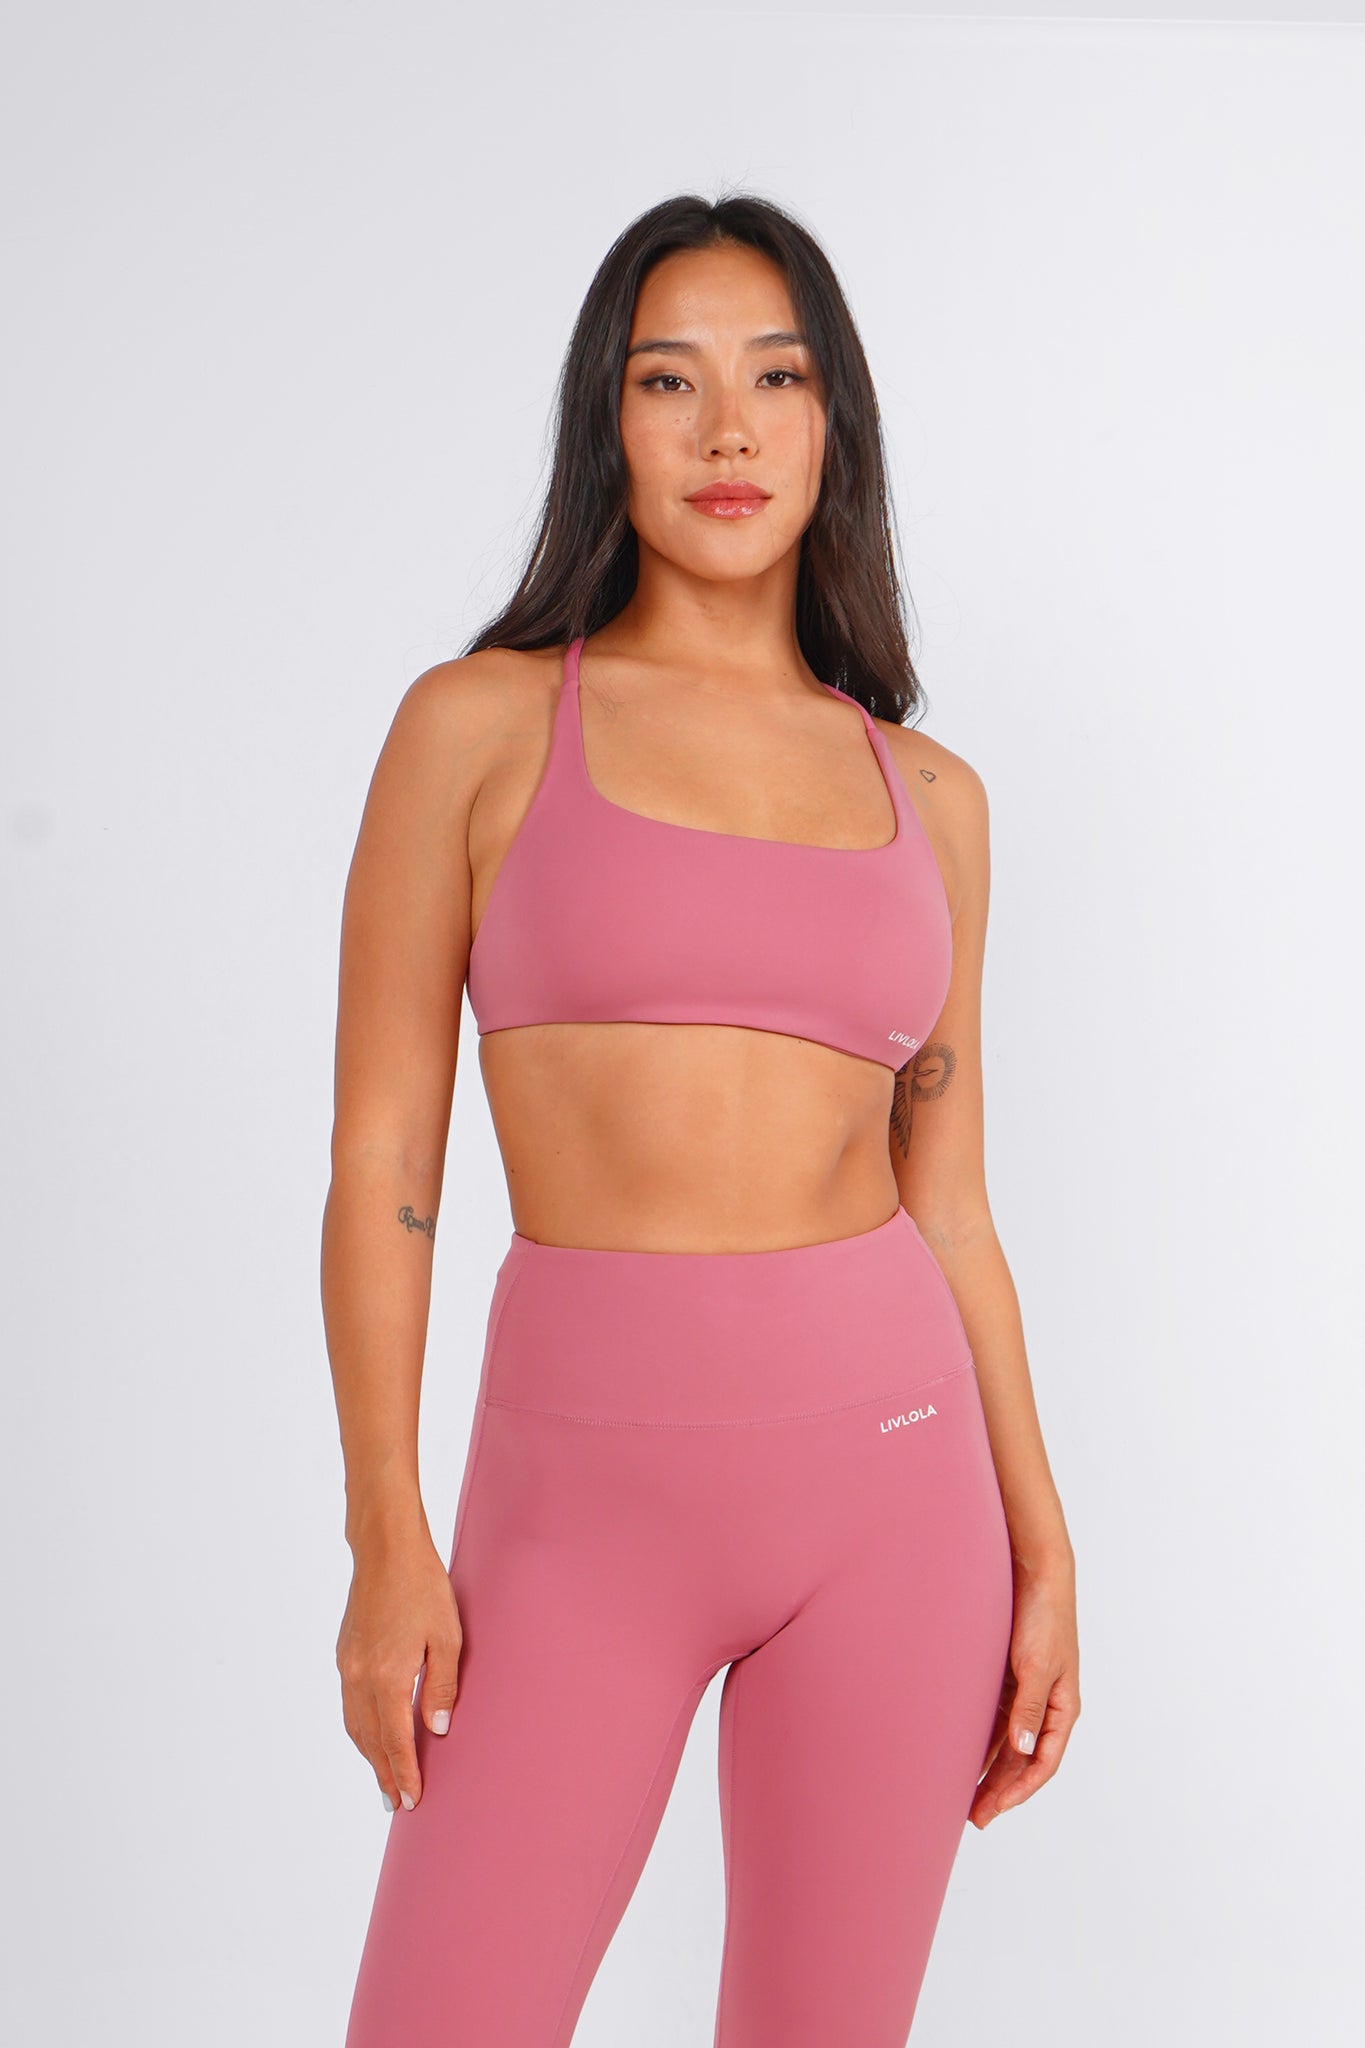 Buttery Soft 2 Piece Bra + leggings Gym Set Women Workout Clothes